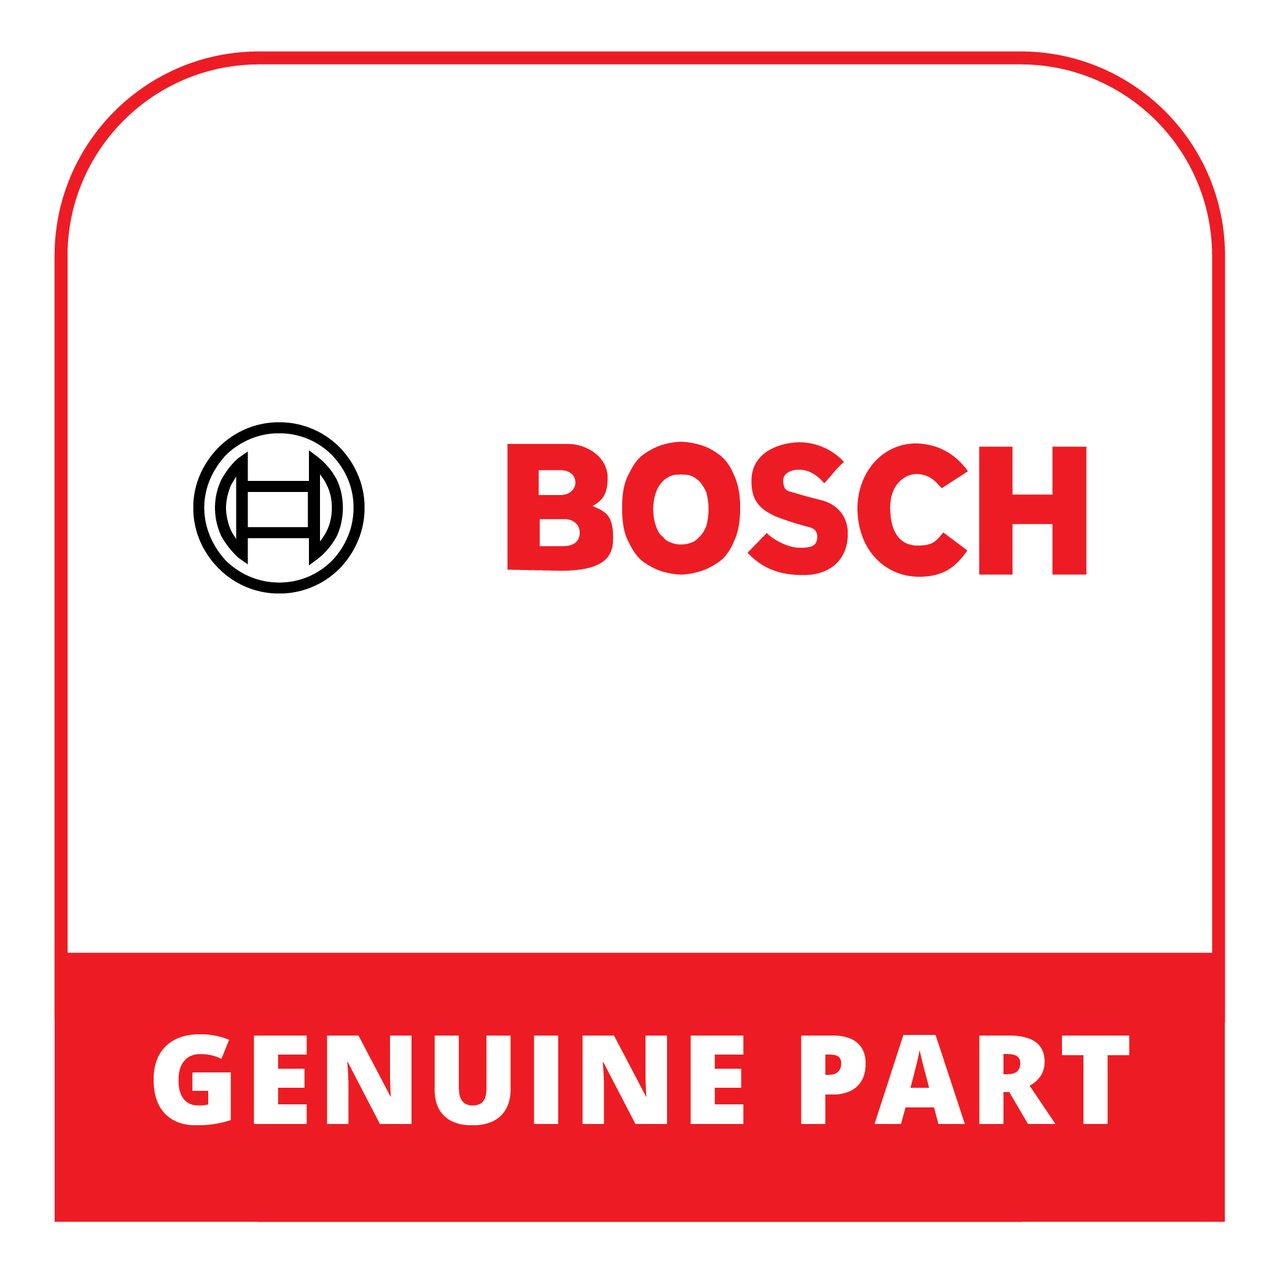 Bosch (Thermador) 20001912 - Collector - Genuine Bosch (Thermador) Part